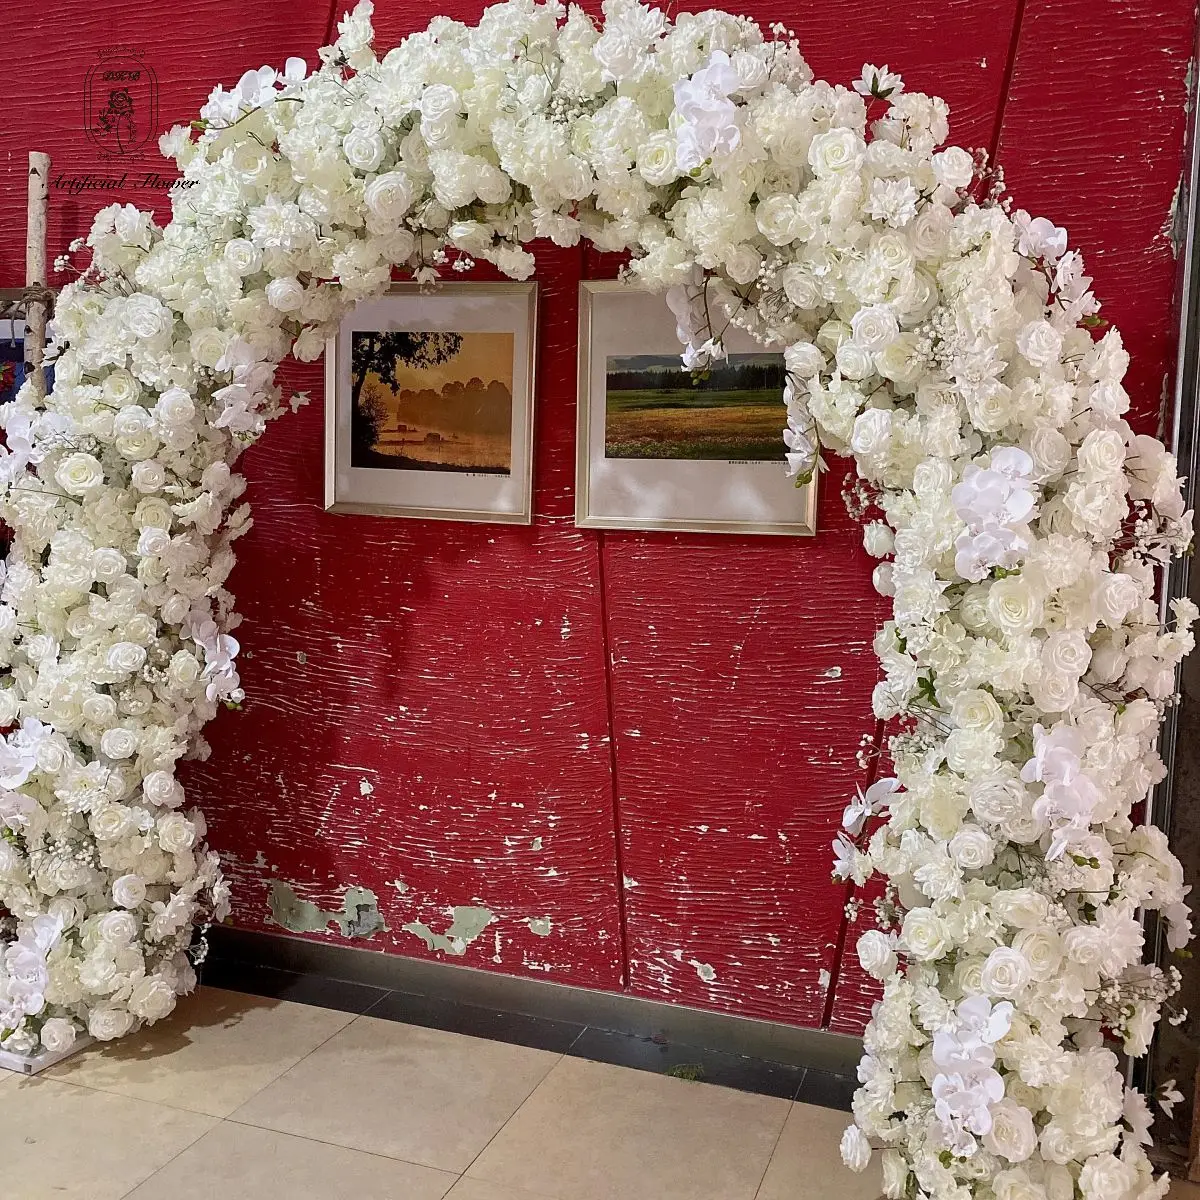 

DKB Decorative Artificial Silk Flower White Rose Arch Frame Floral Garden Backdrop For Wedding Entrance Stage Decor